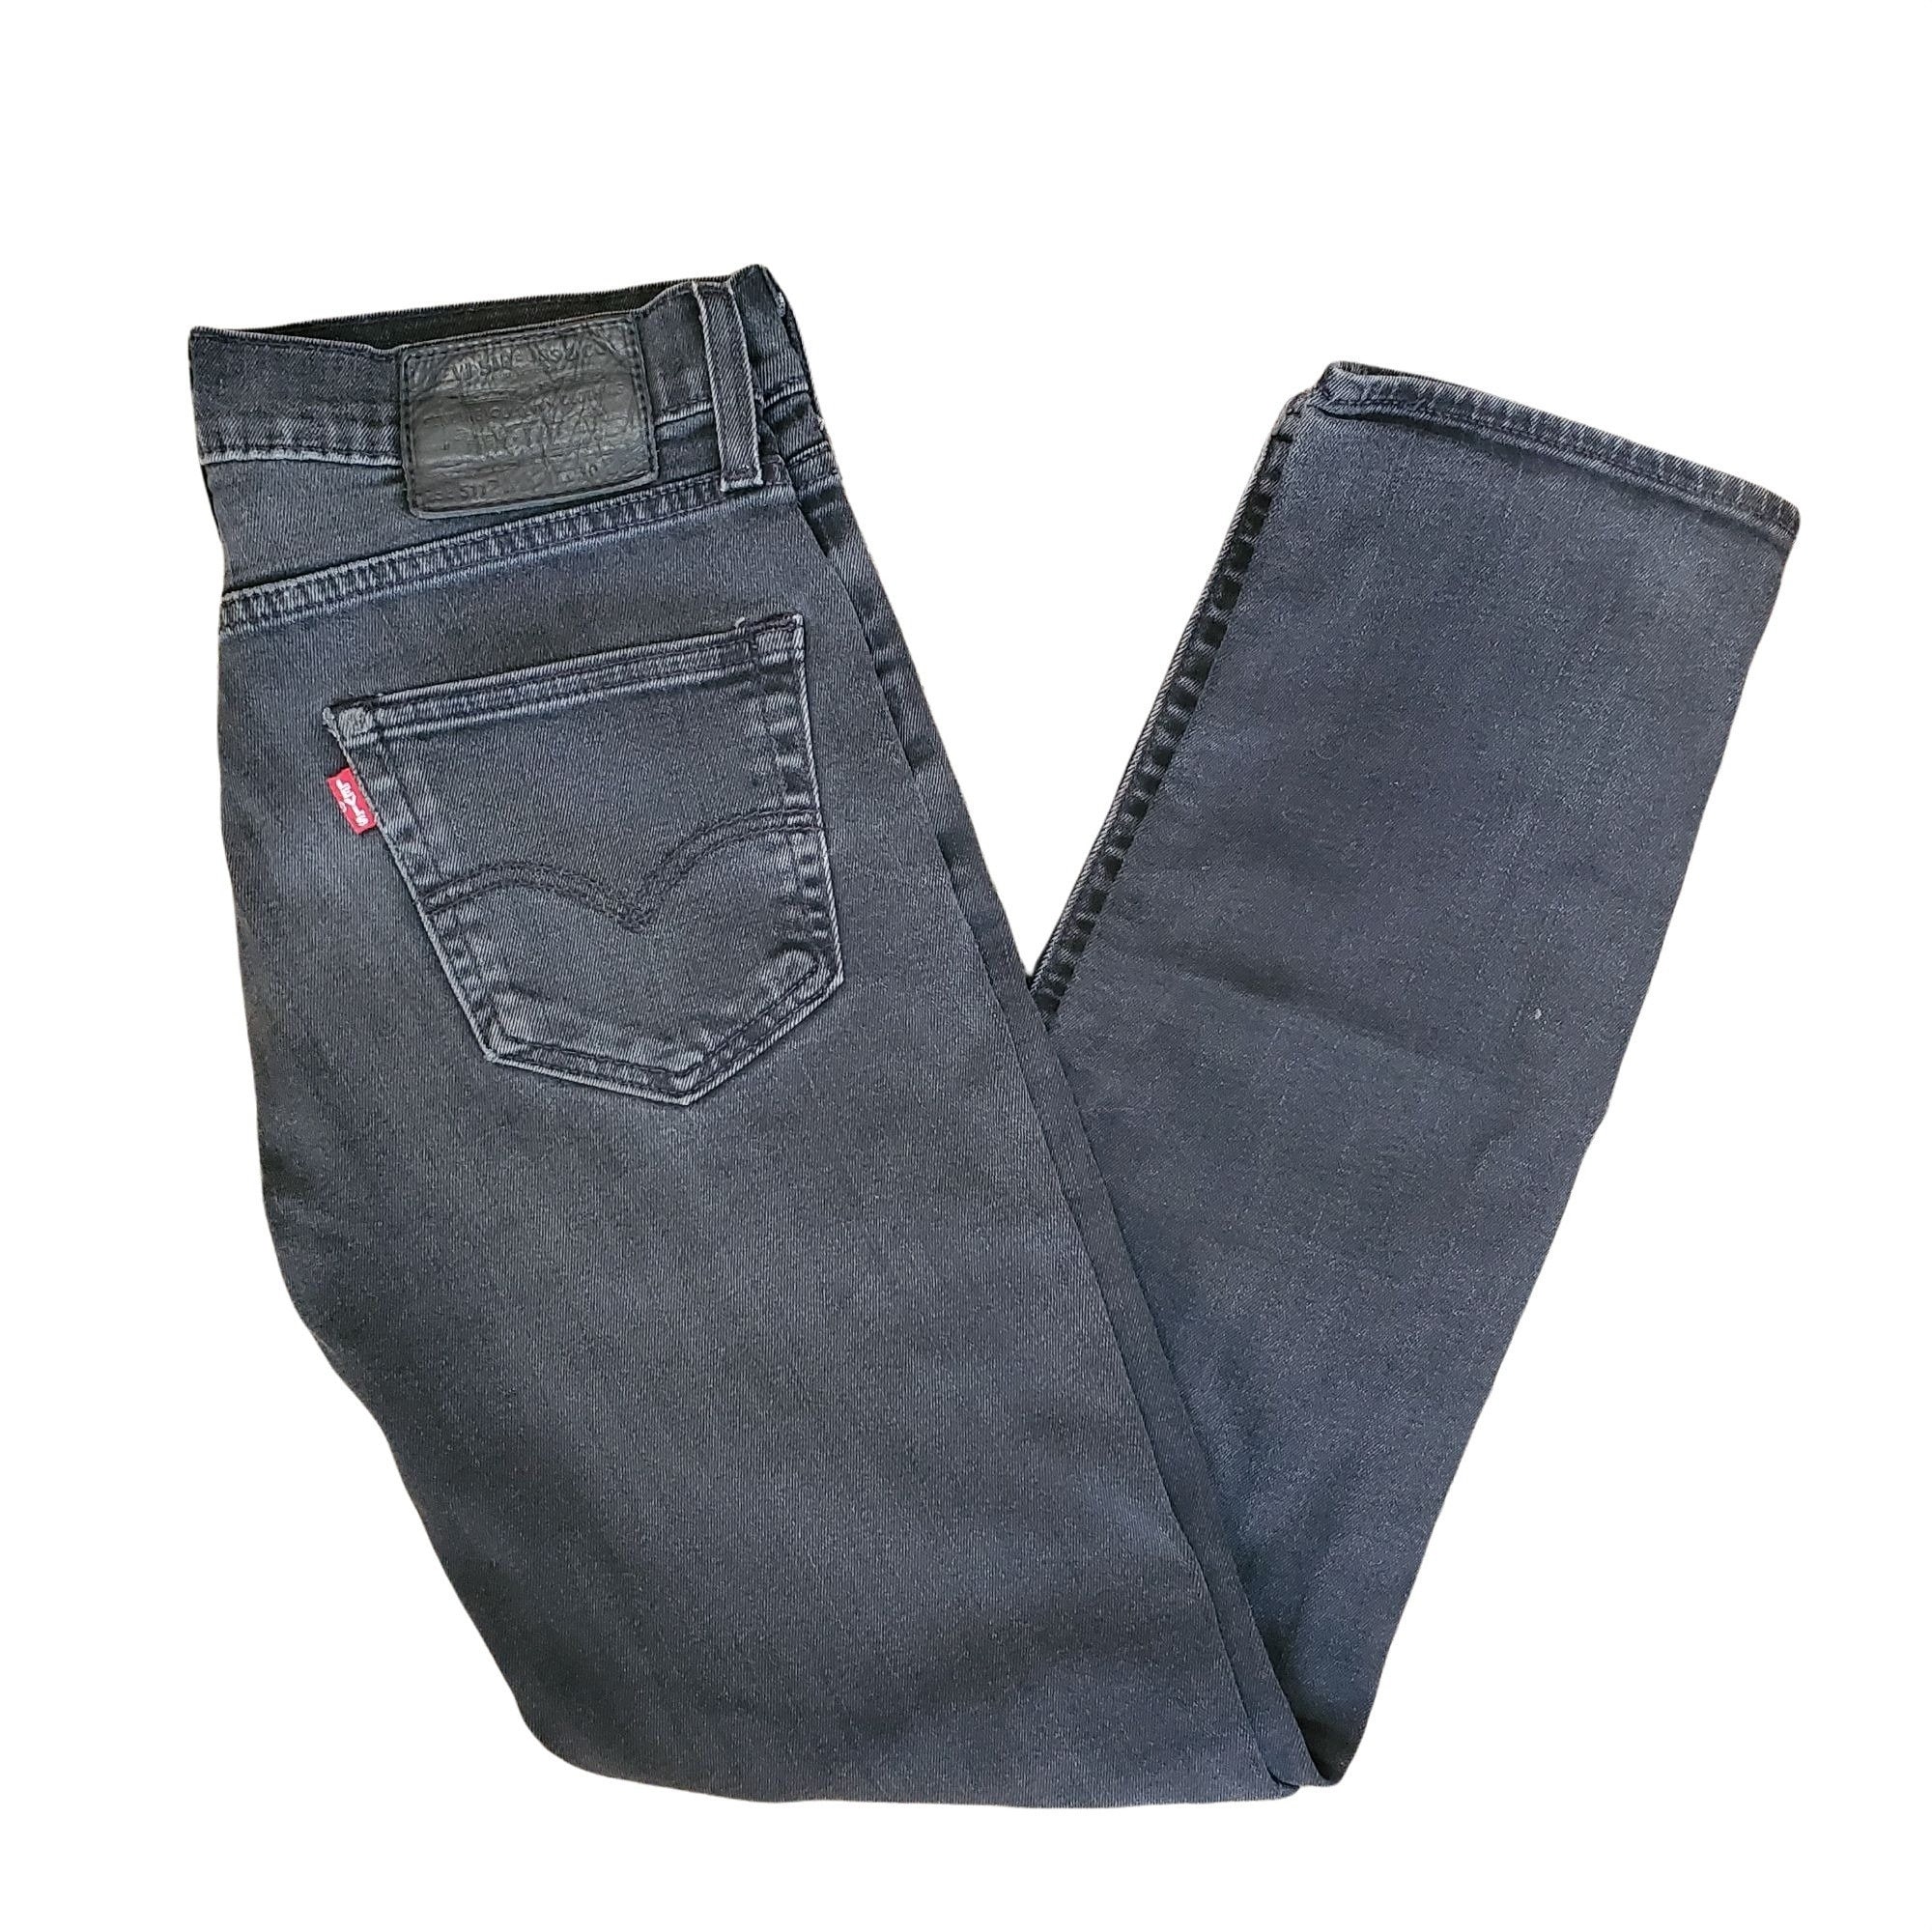 Levis 511 Jeans Big E Black Slim Fit Leather Patch Stretch - Etsy